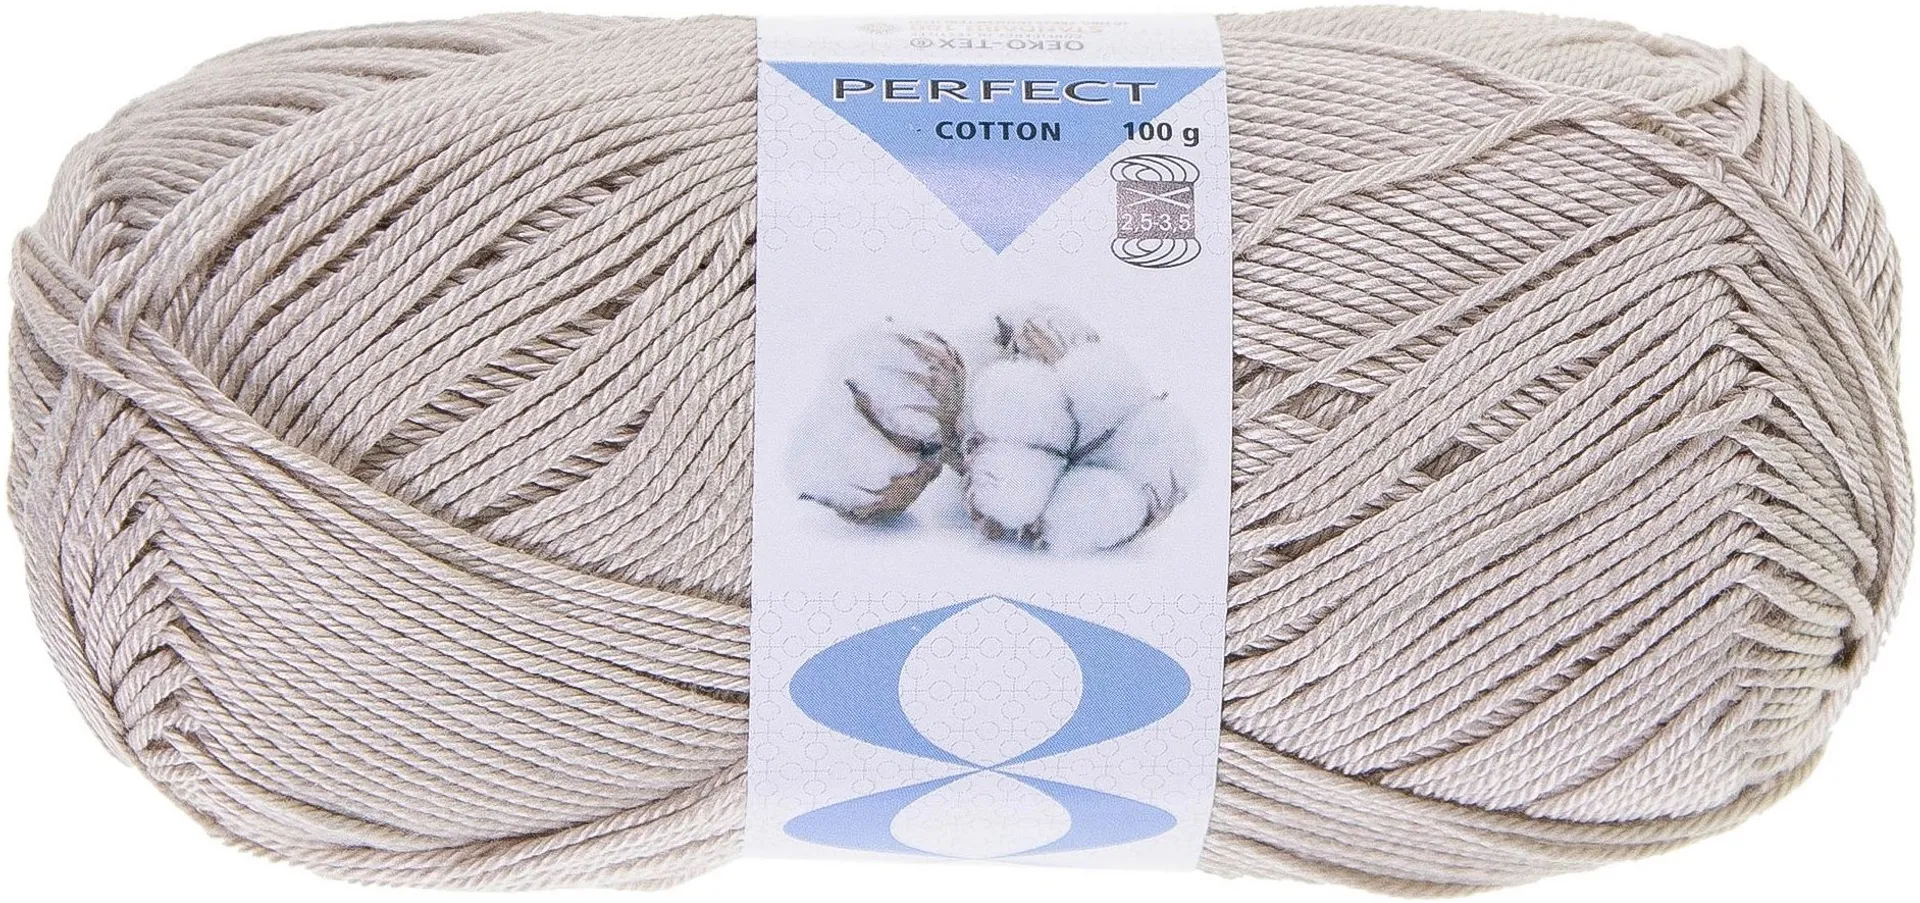 Prym puuvillalanka Perfect Cotton 100g